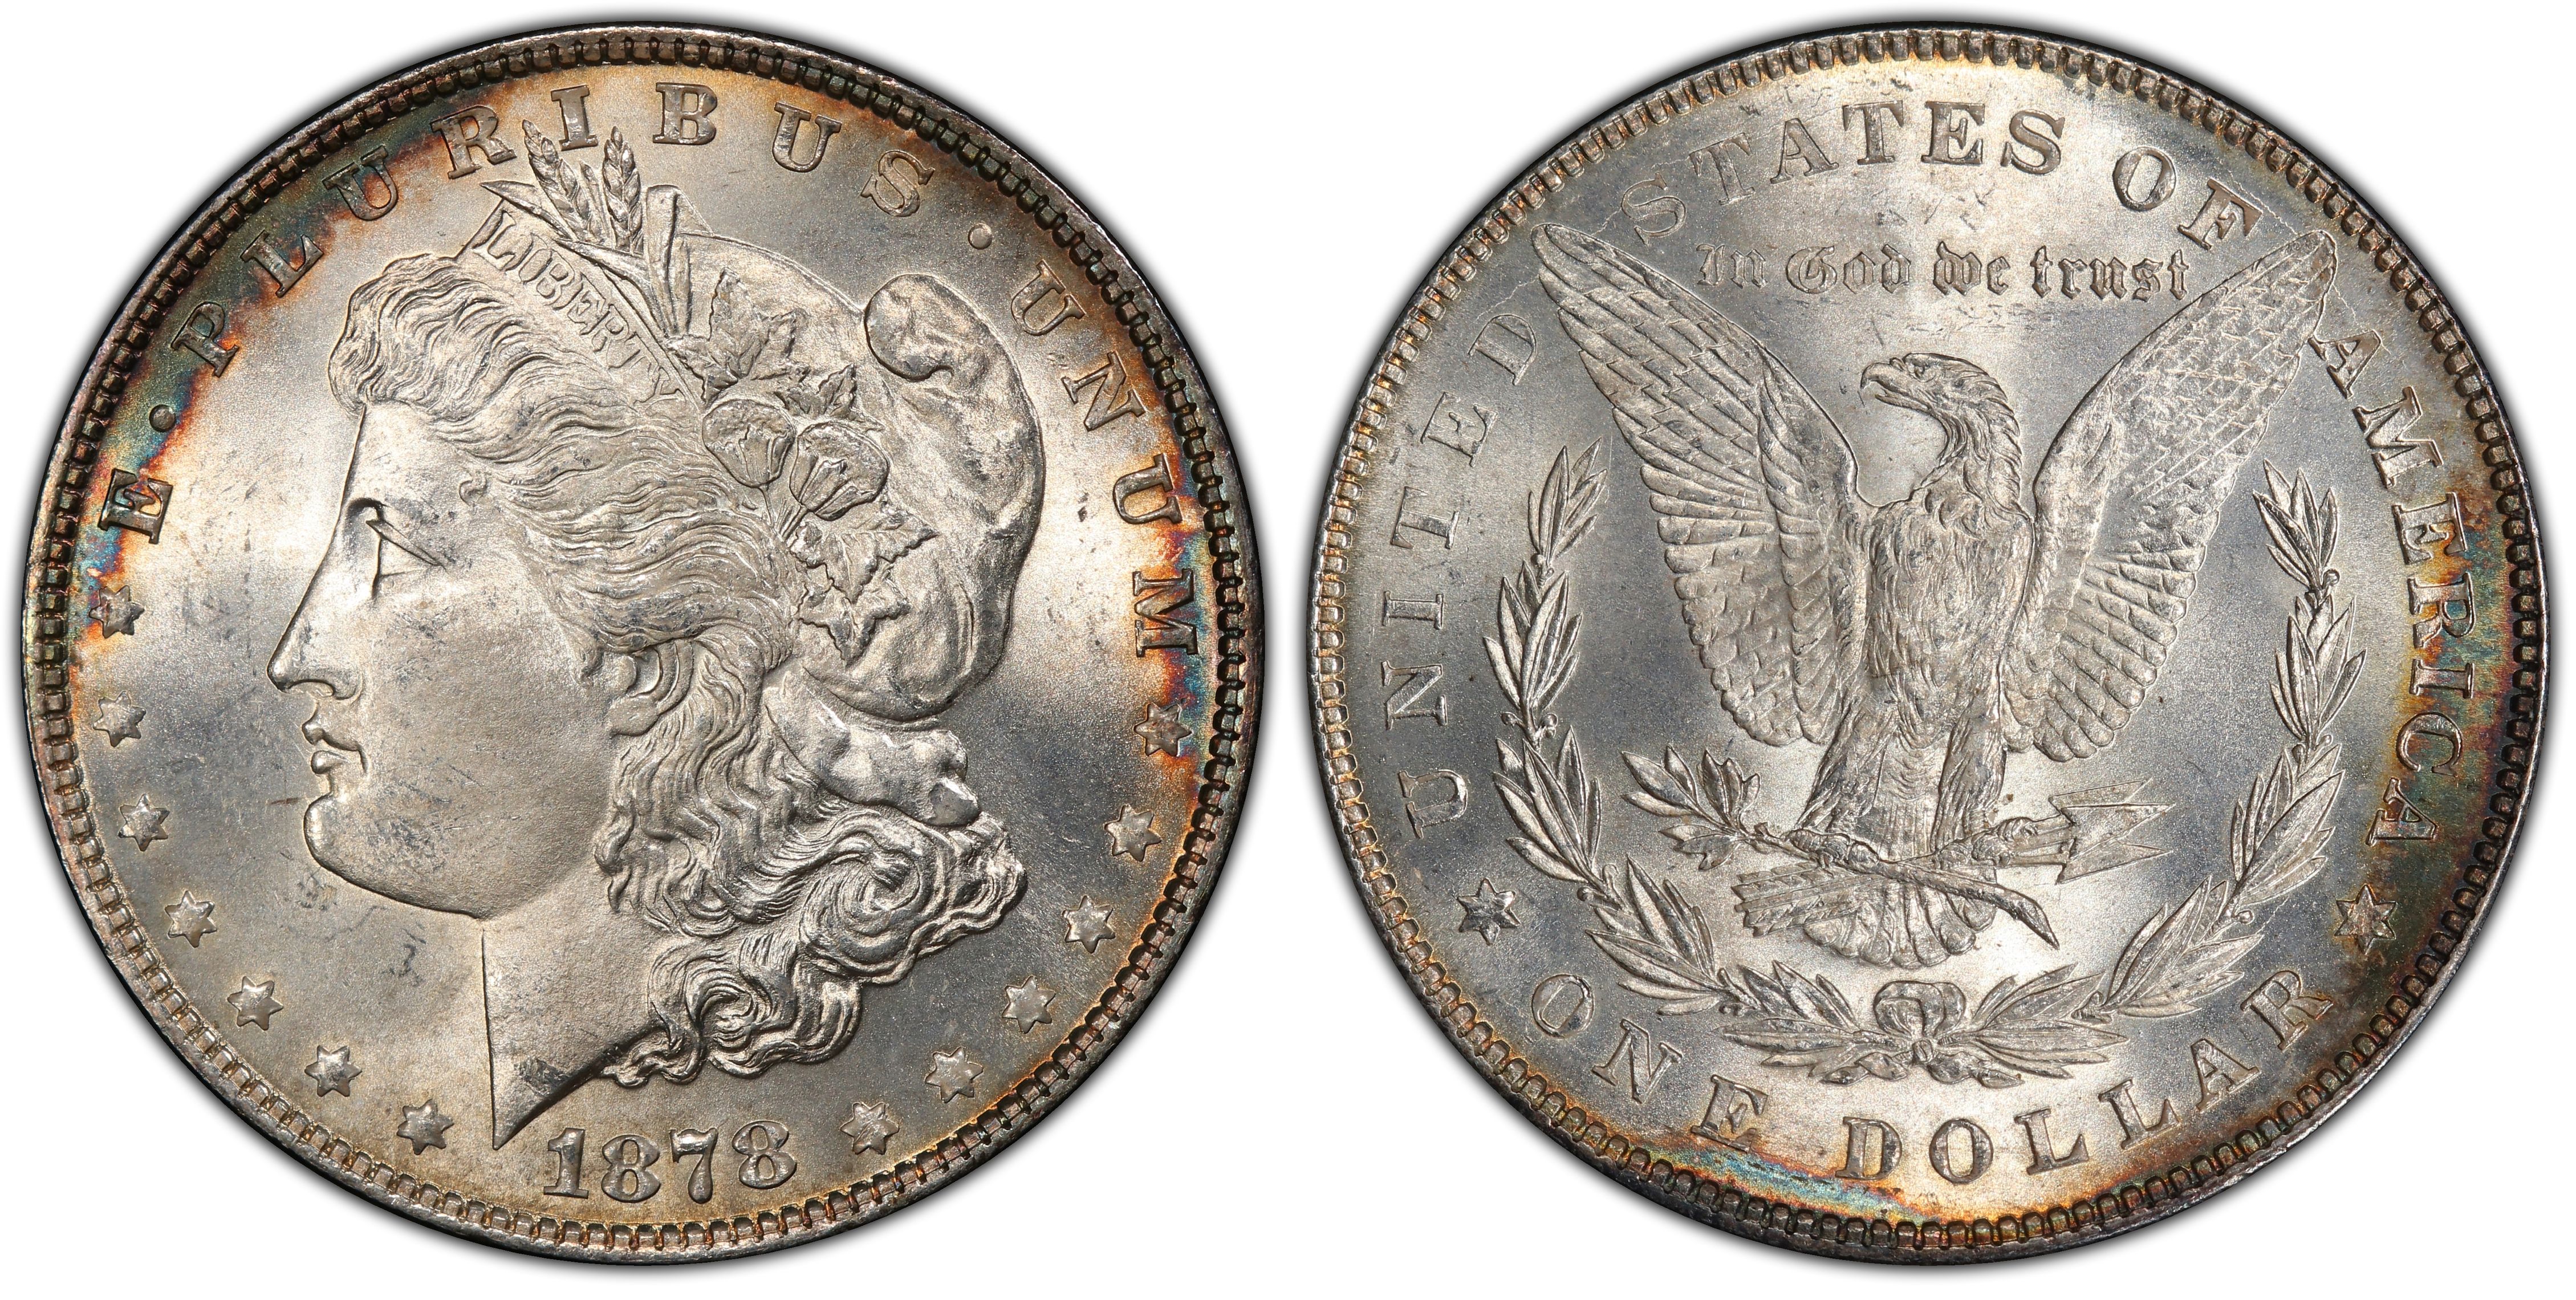 Details about  / 1878 Morgan Silver Dollar 7//8 TF VAM-33A Weak ANACS MS-62 Rarity-6 Registry